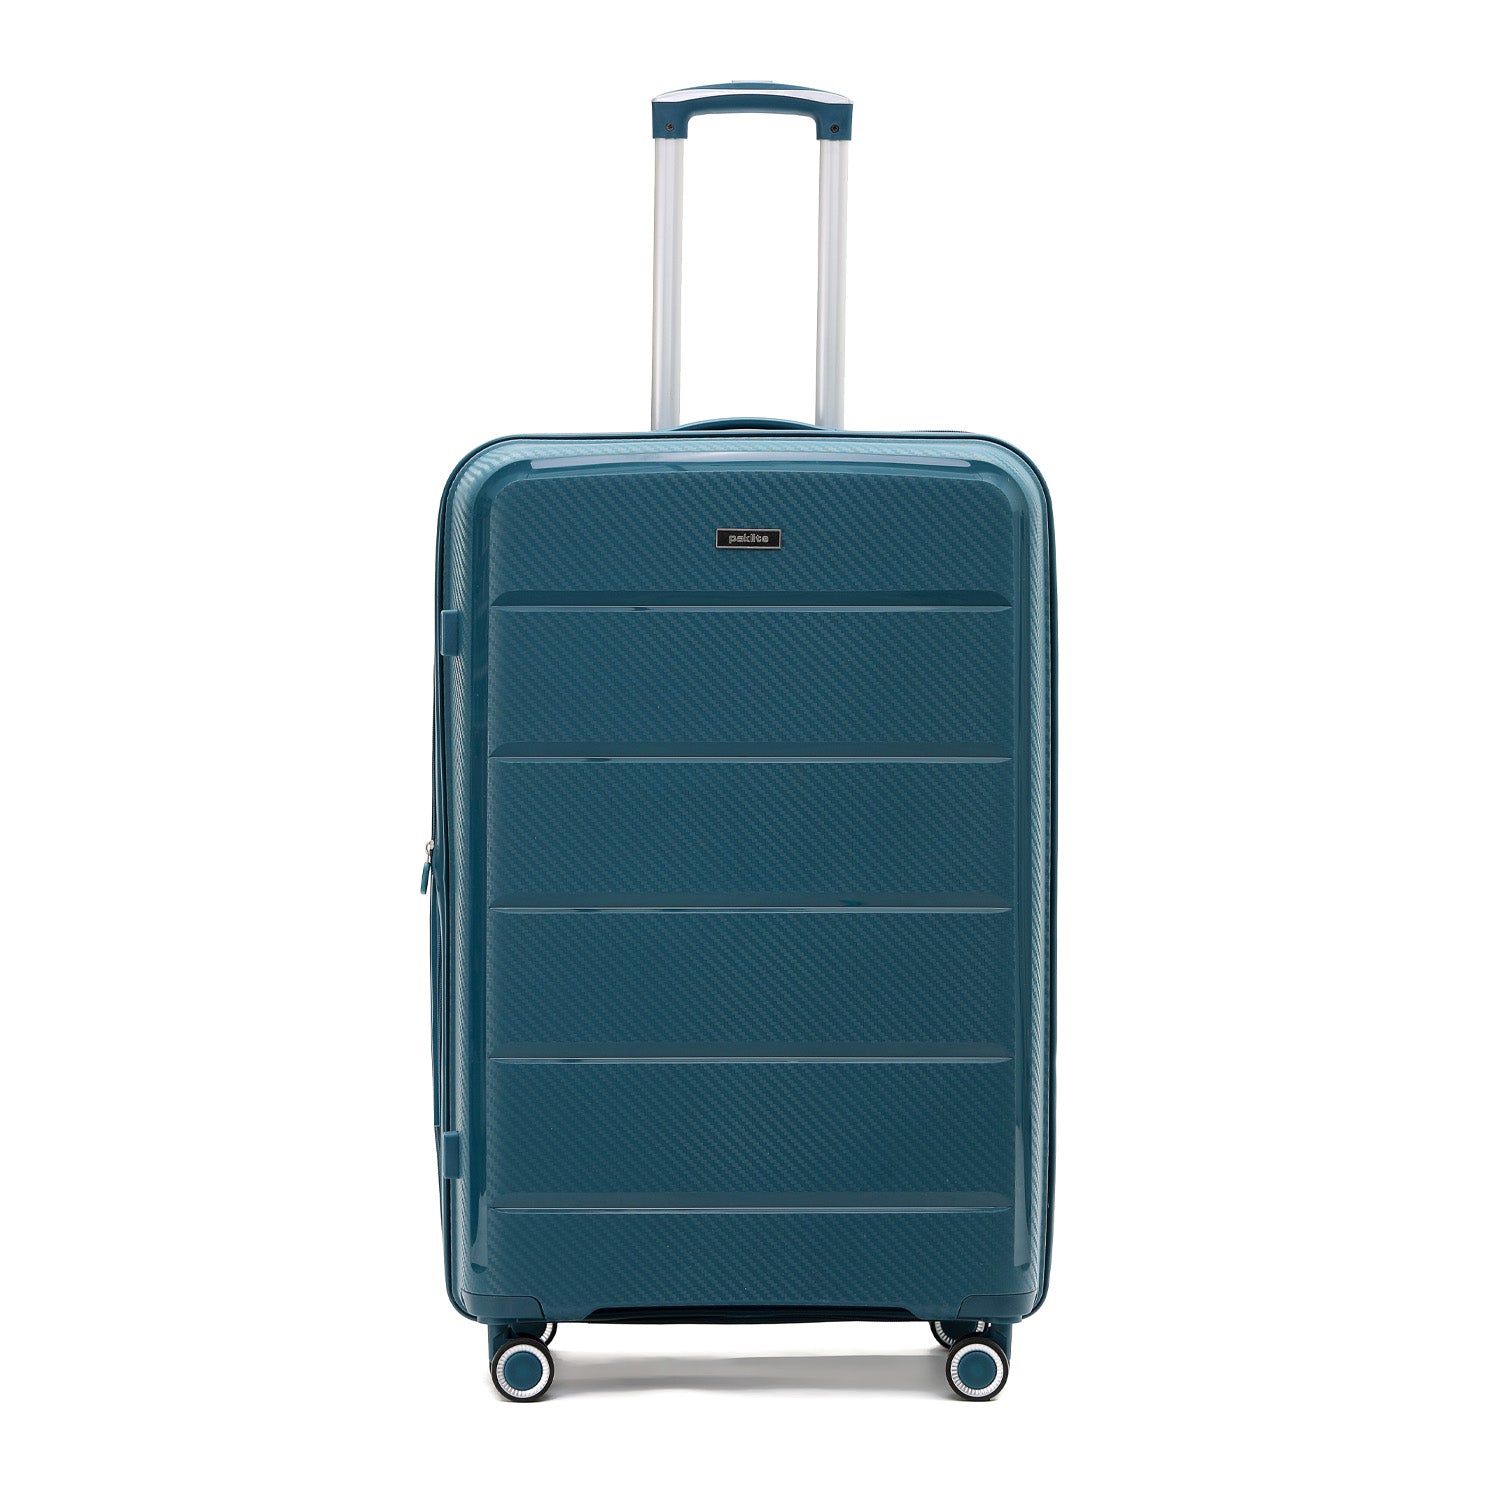 Paklite - PA7350 Large 75cm spinner suitcase - Blue